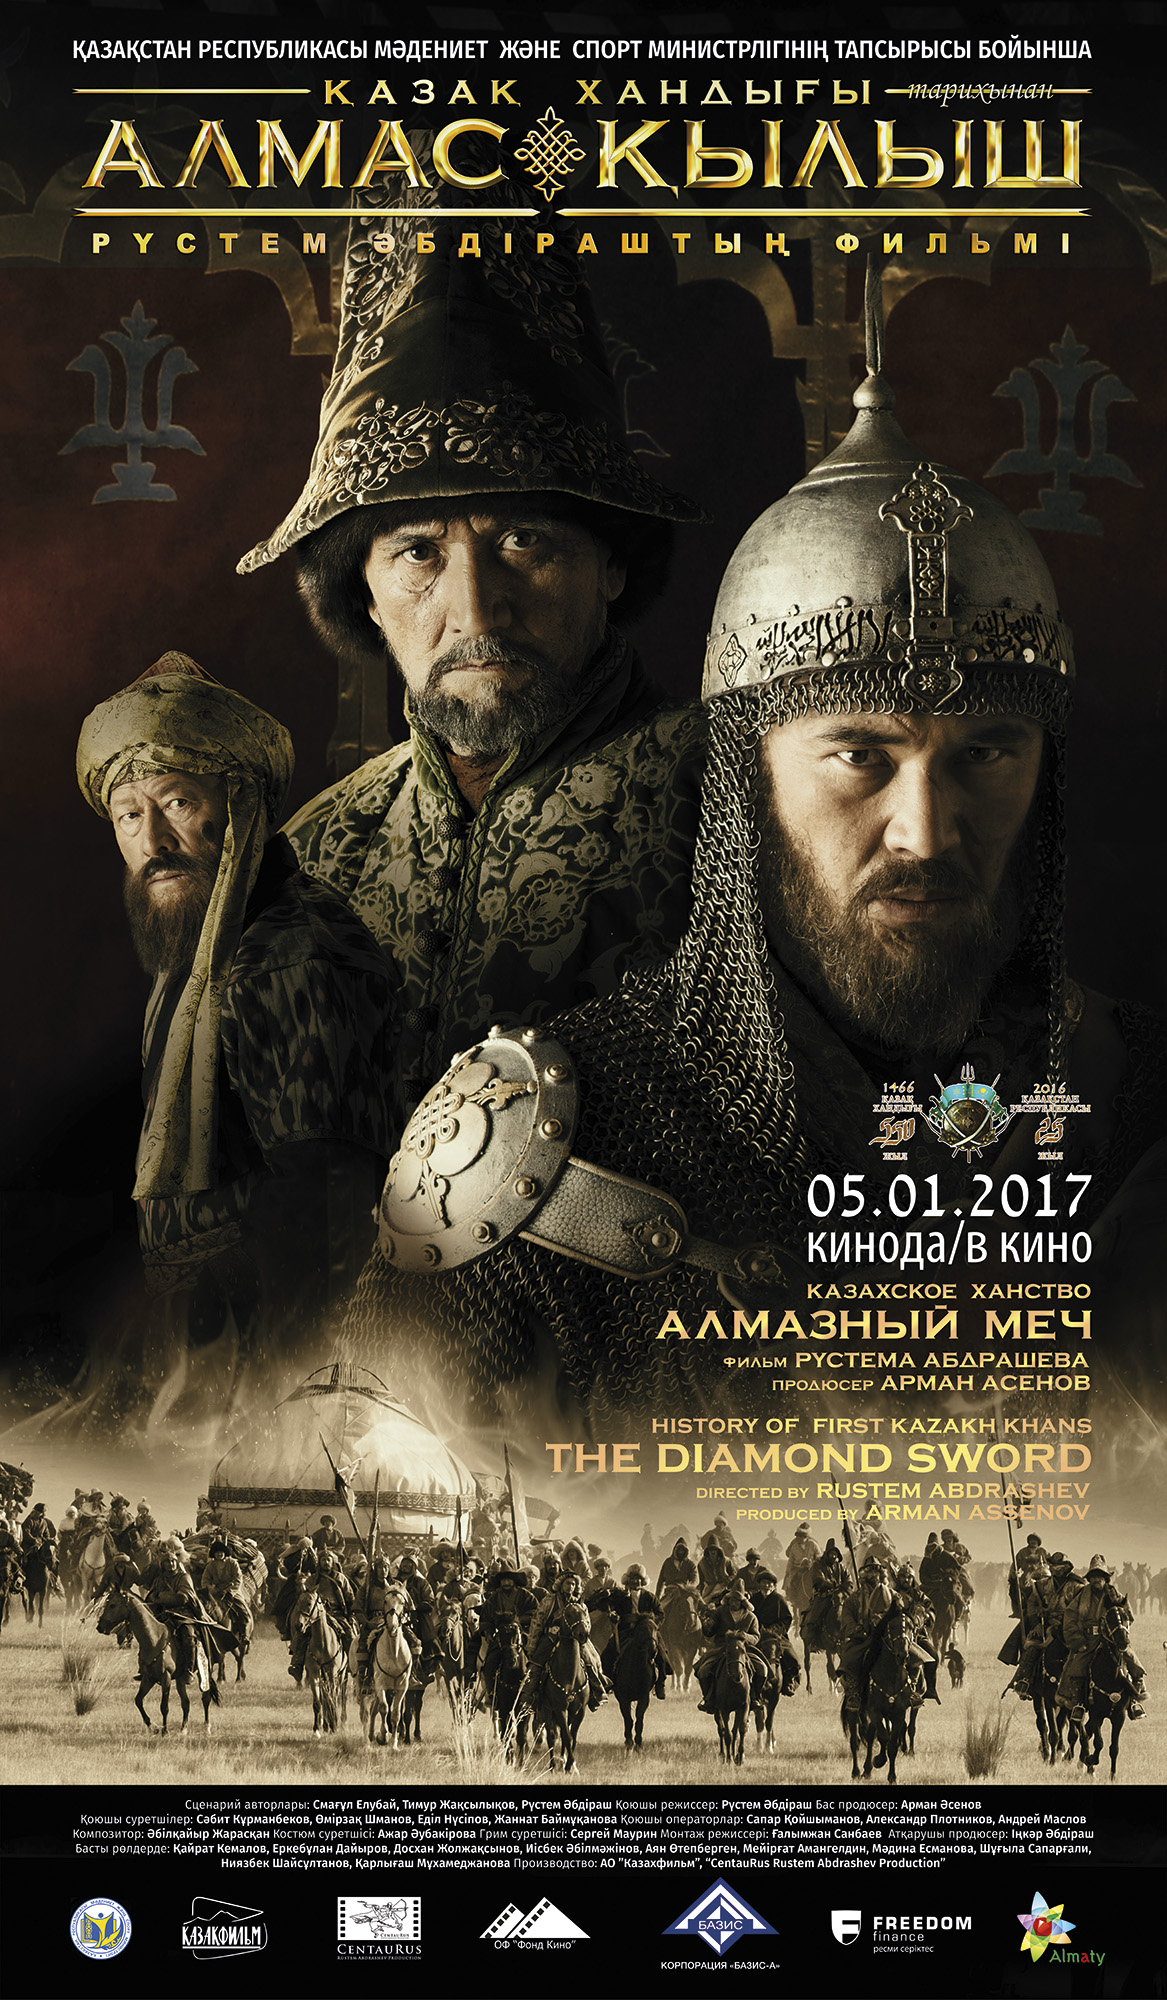 Kazakh Khanate: Diamond Sword Poster